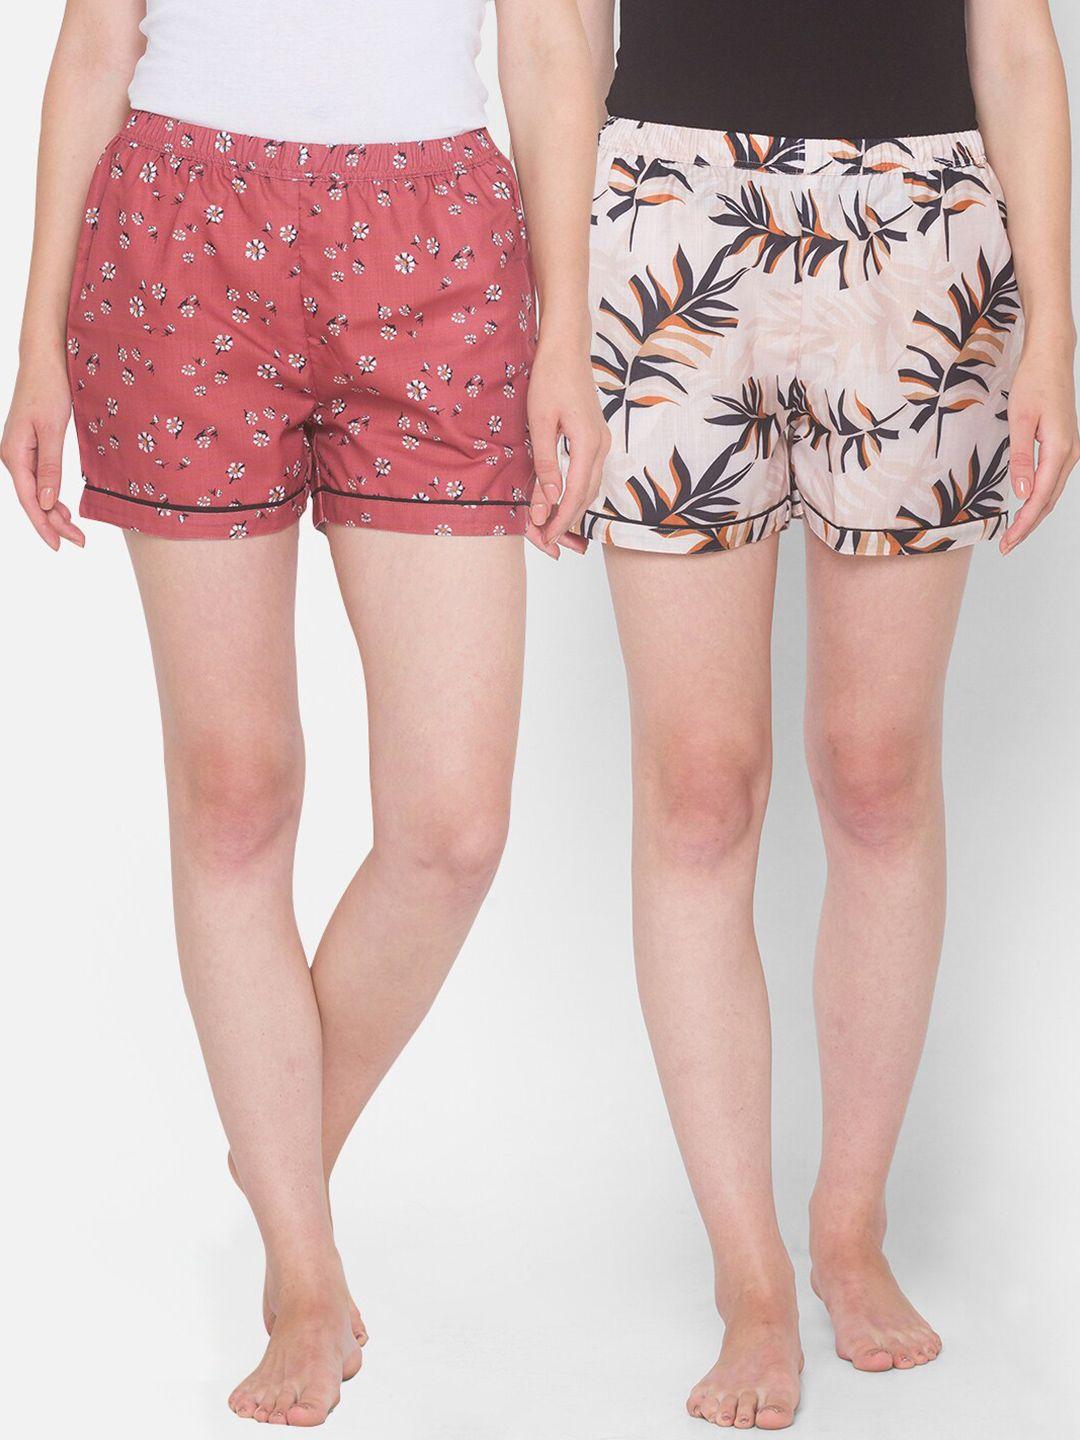 fashionrack-women-pack-of-2-mauve-&-off-white-printed-lounge-shorts